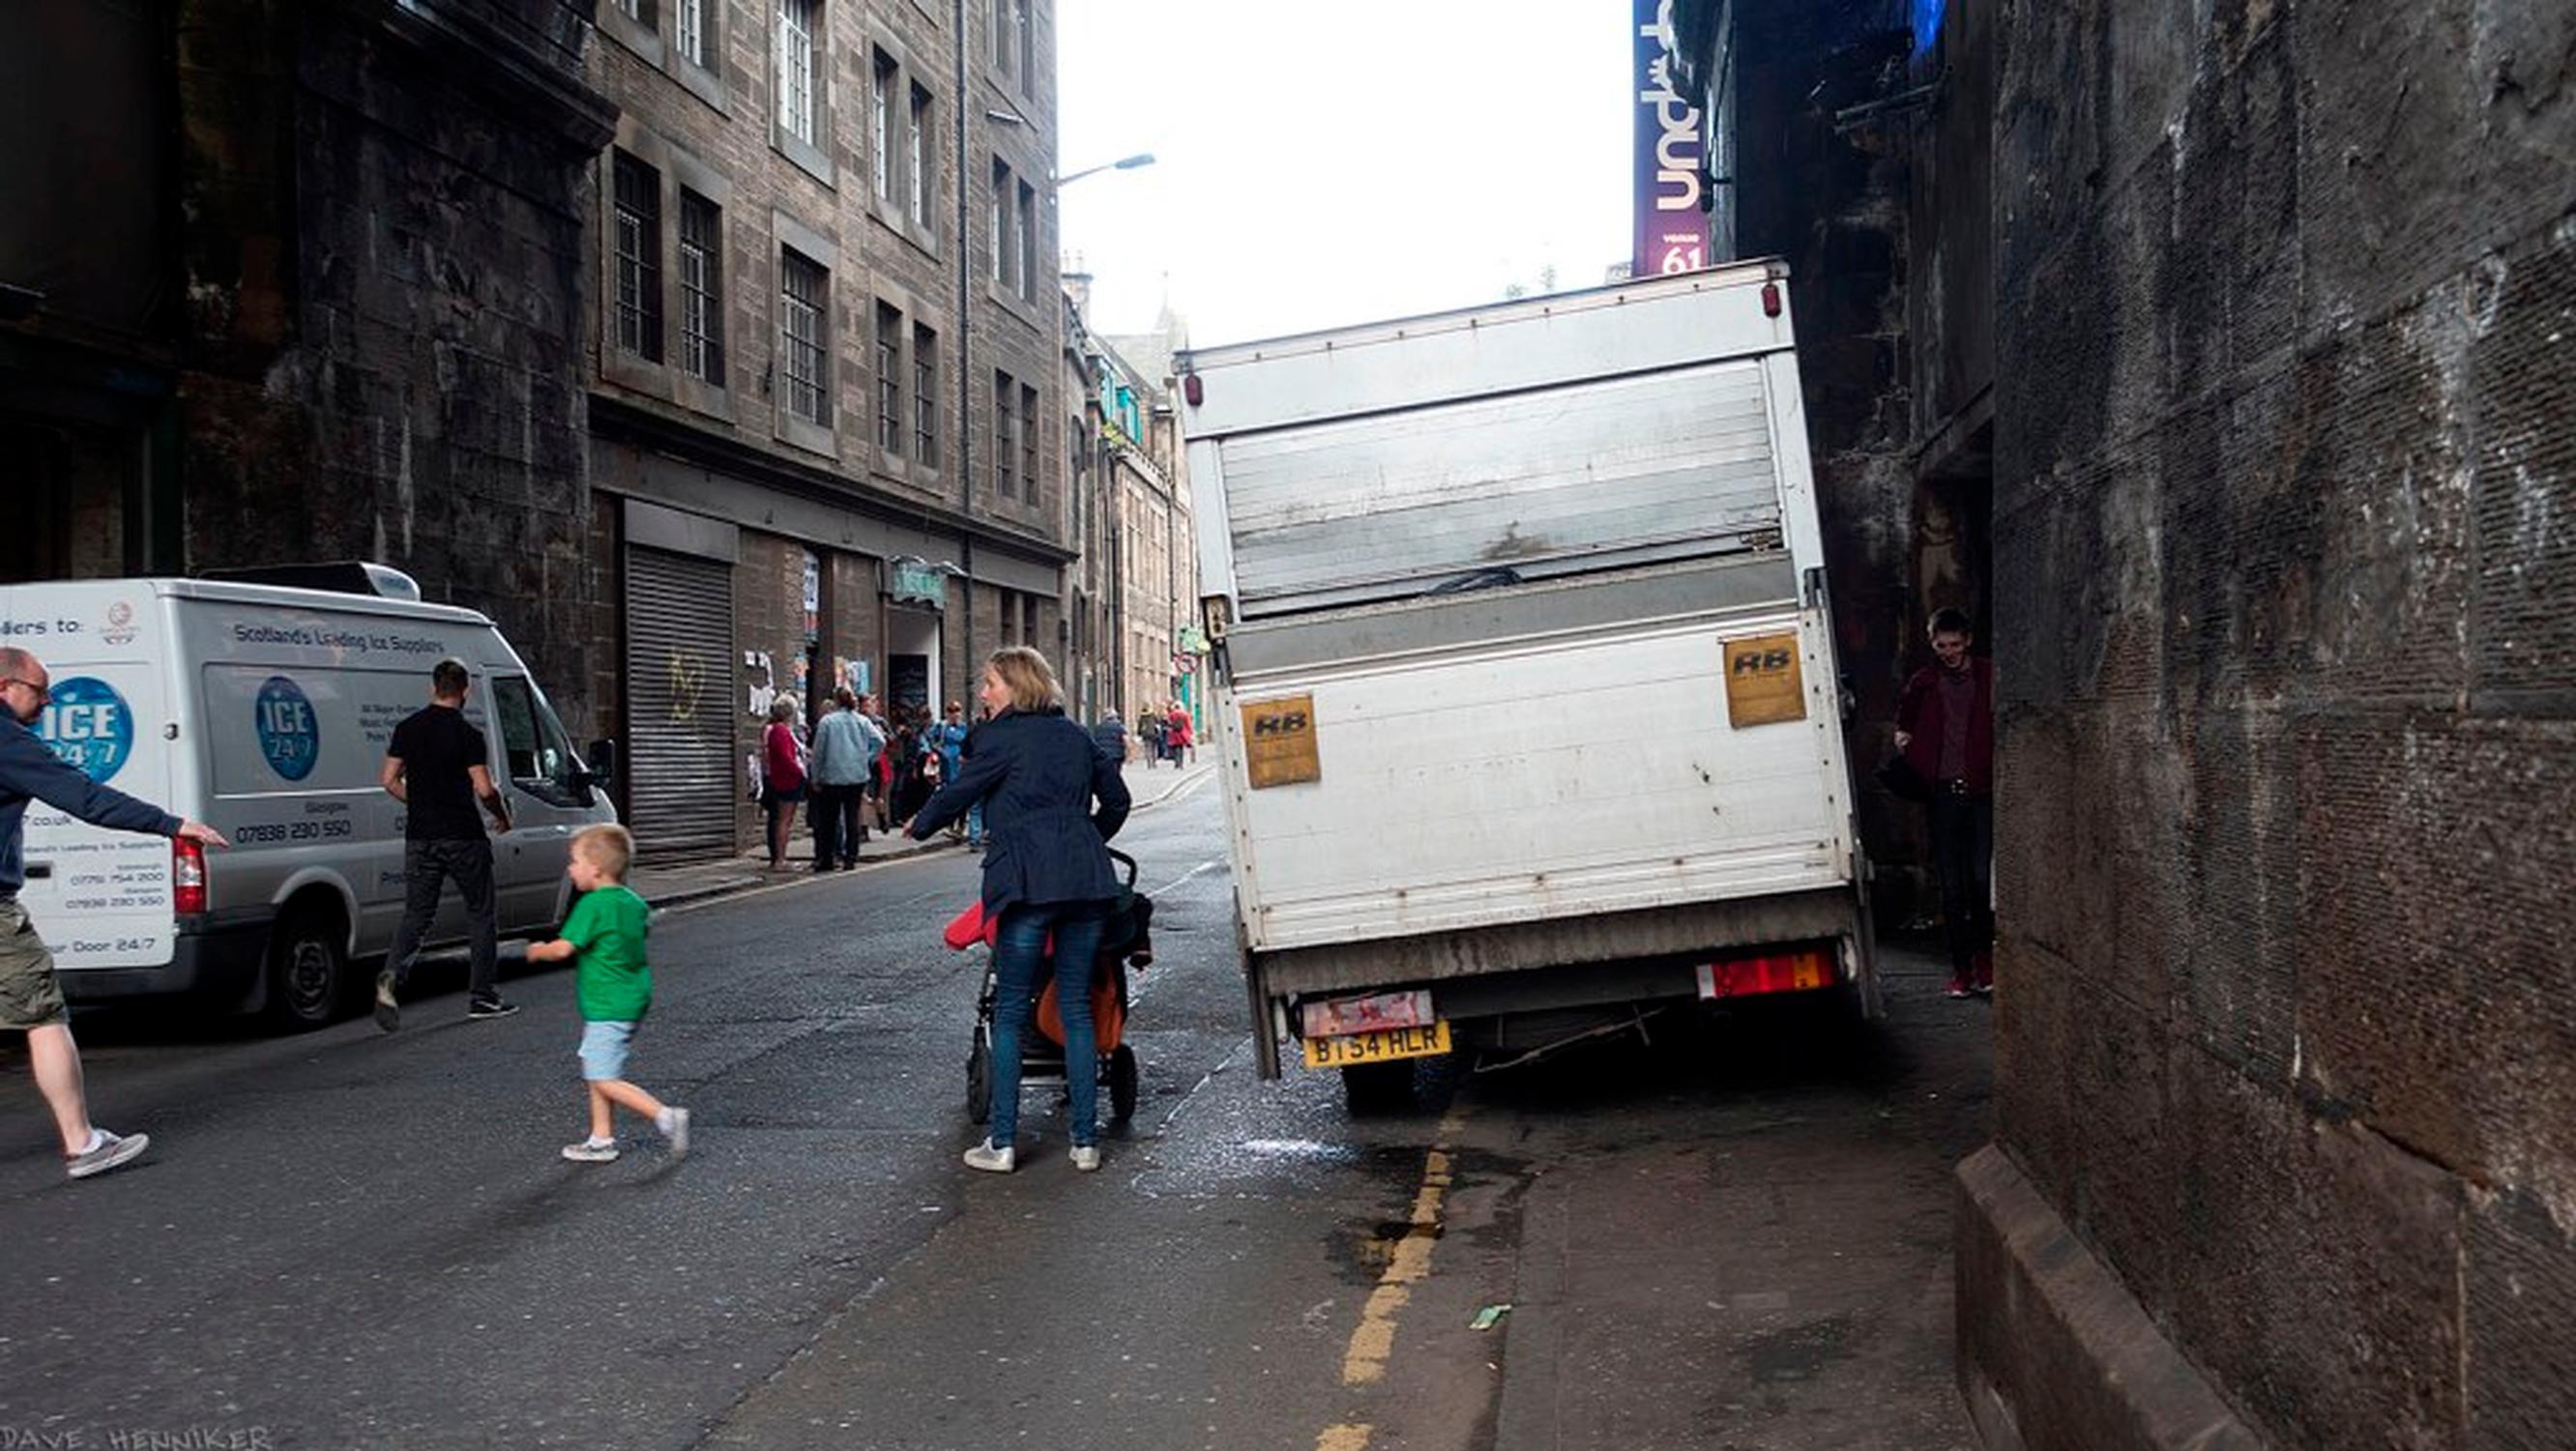 Edinburgh to be first Scottish city to ban pavement parking